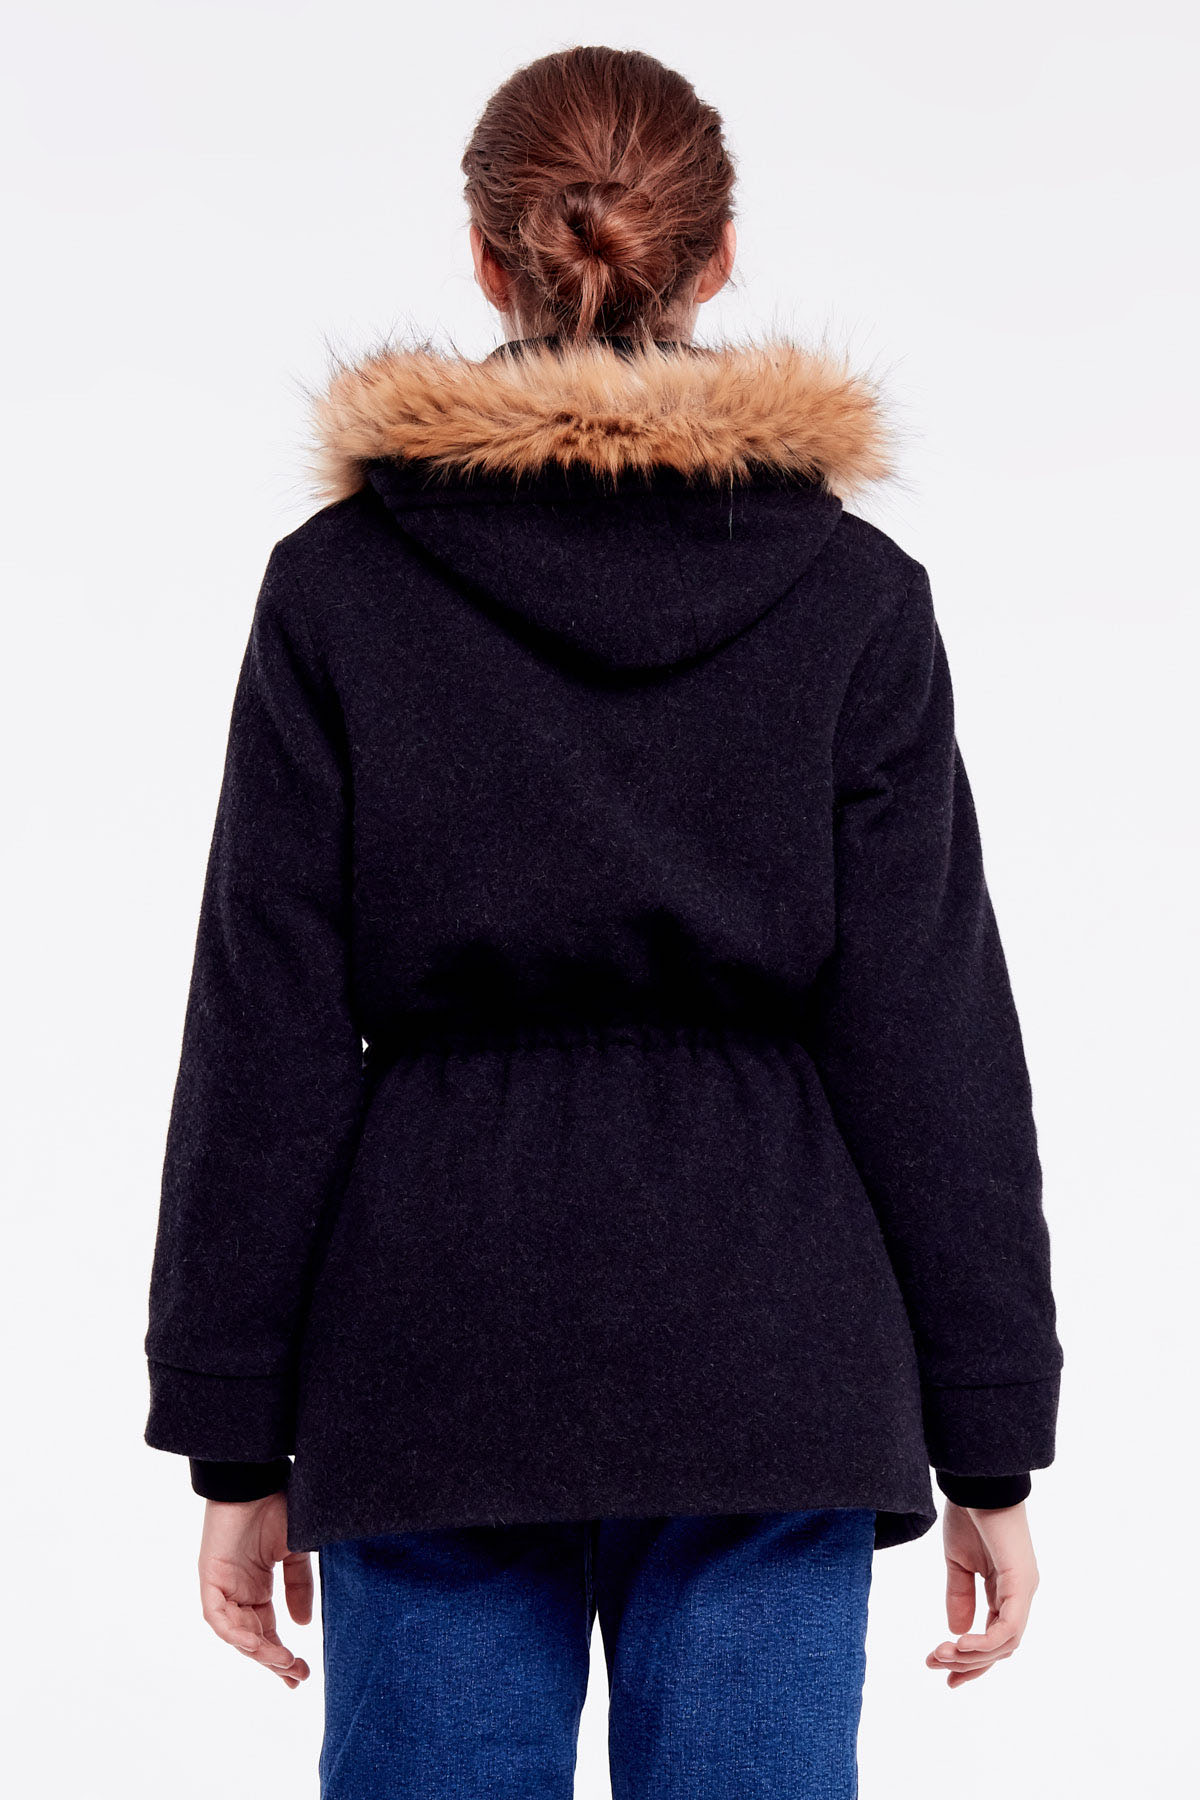 Black coat with hood, photo 4